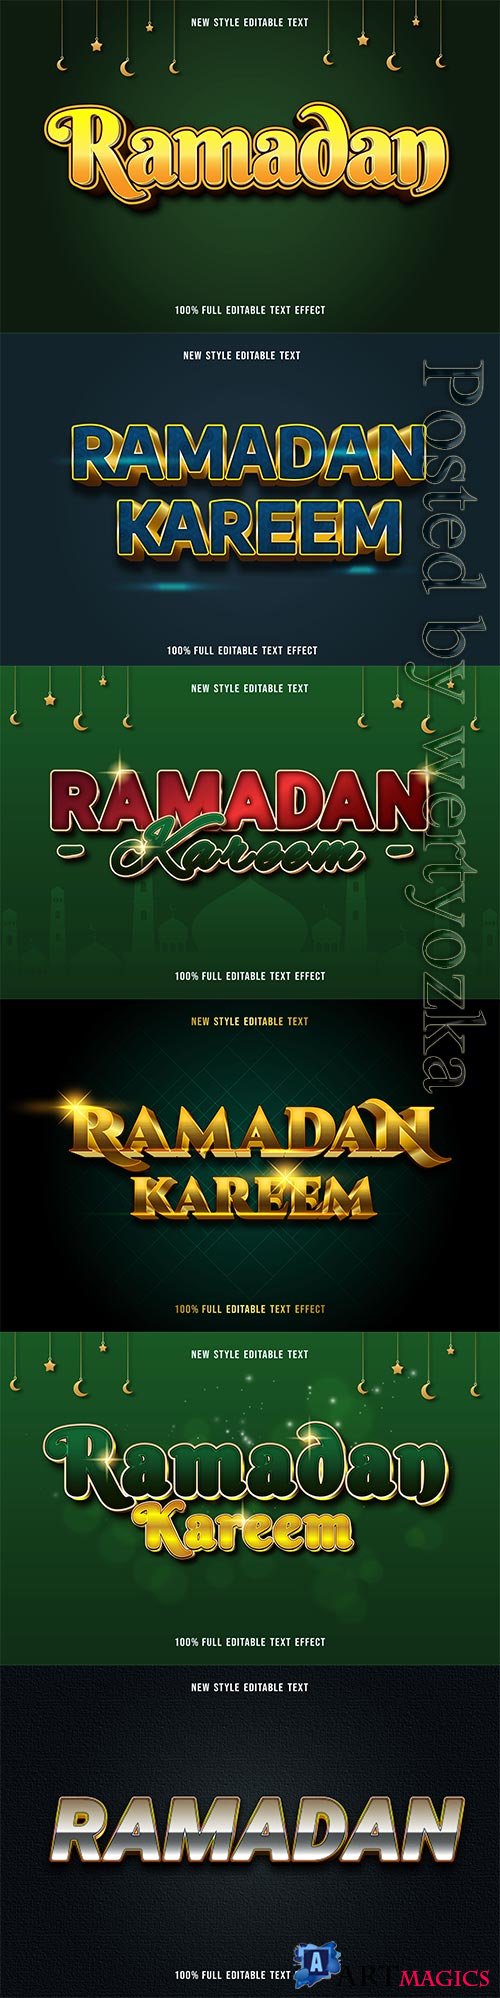 Ramadan kareem, eid mubarak vector text effect vol 3